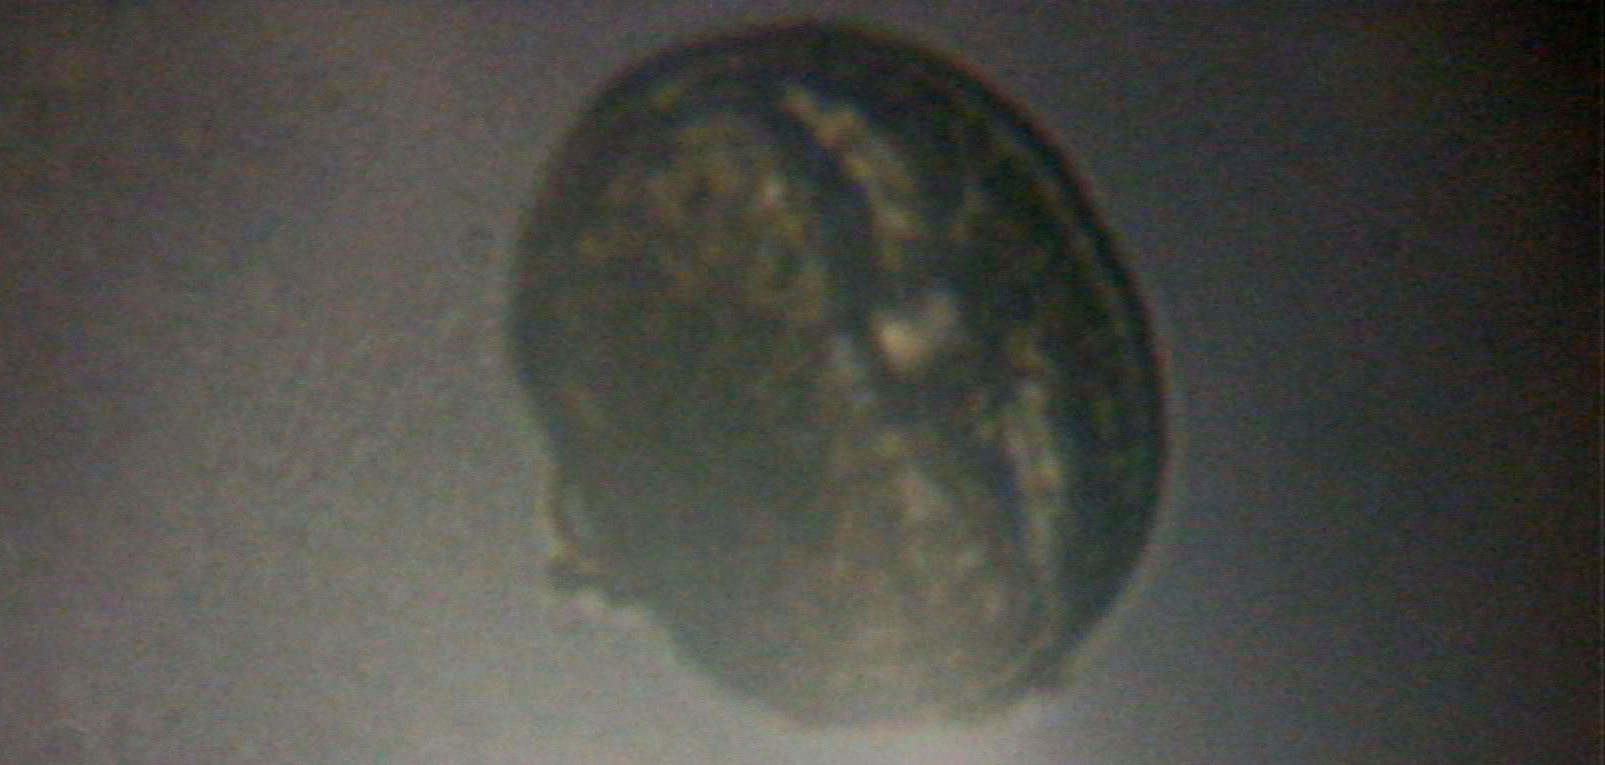 Ziarno pyłku chabra pod mikroskopem